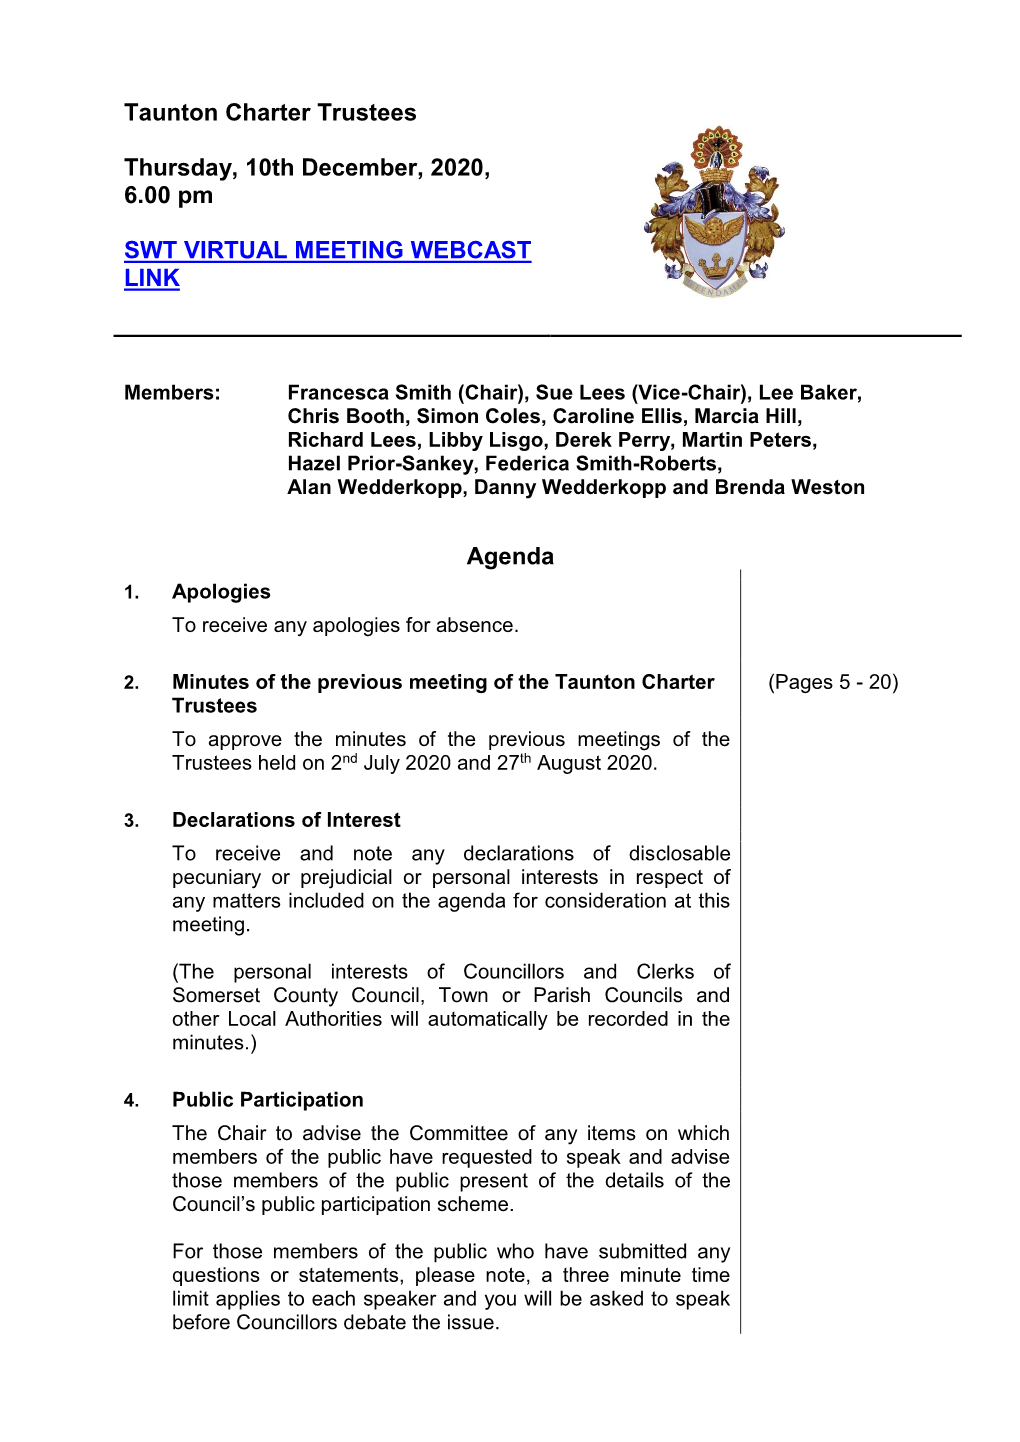 Agenda Document for Taunton Charter Trustees, 10/12/2020 18:00